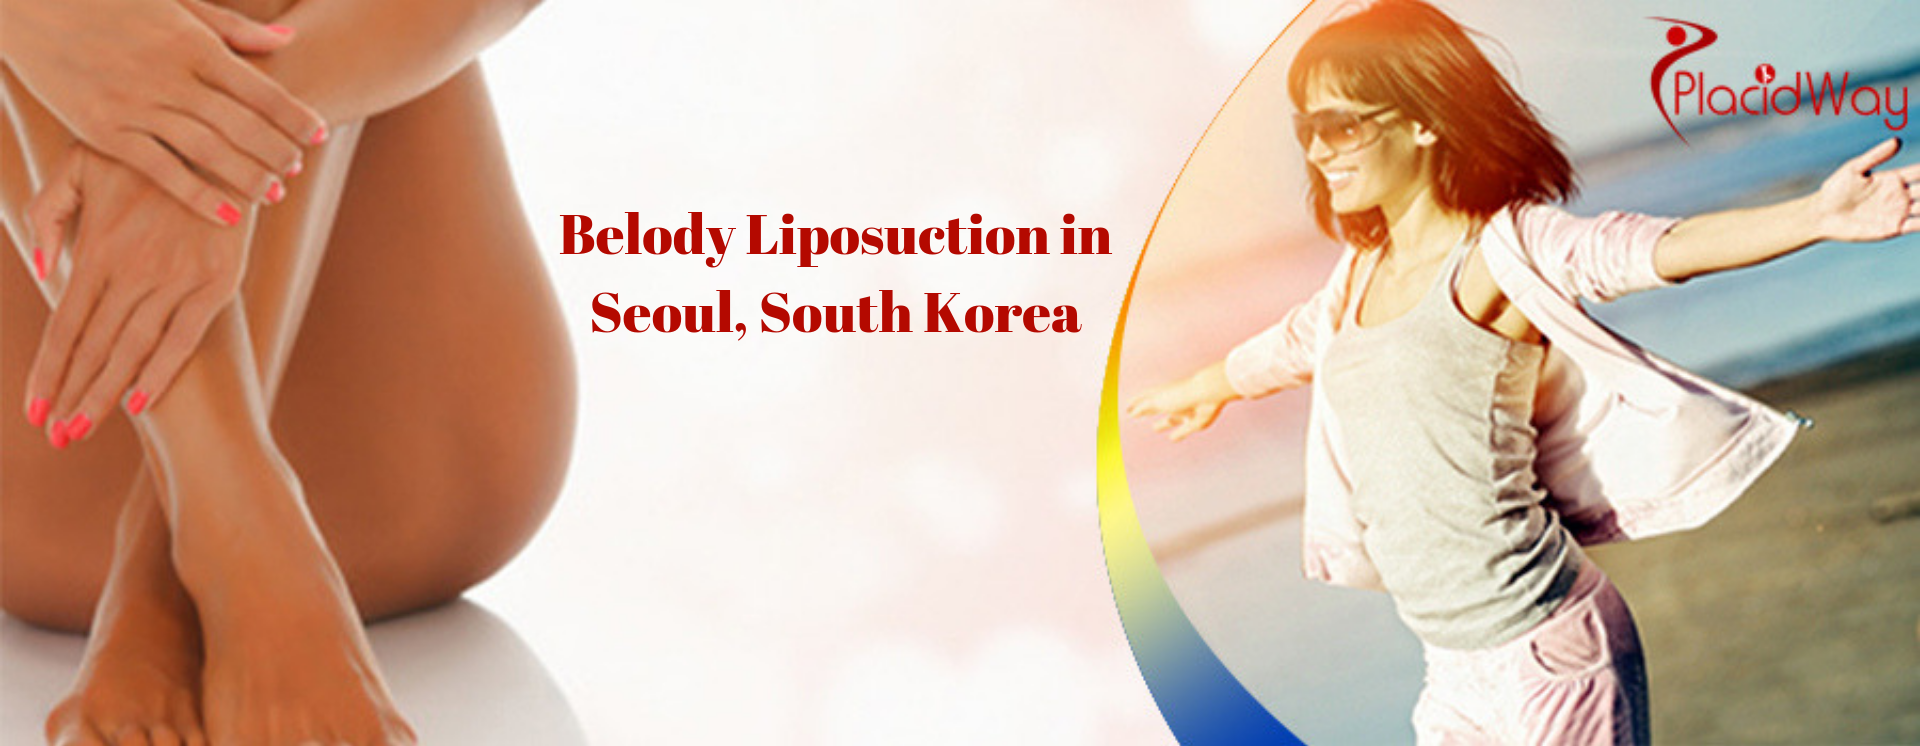 Belody Liposuction in Seoul, South Korea